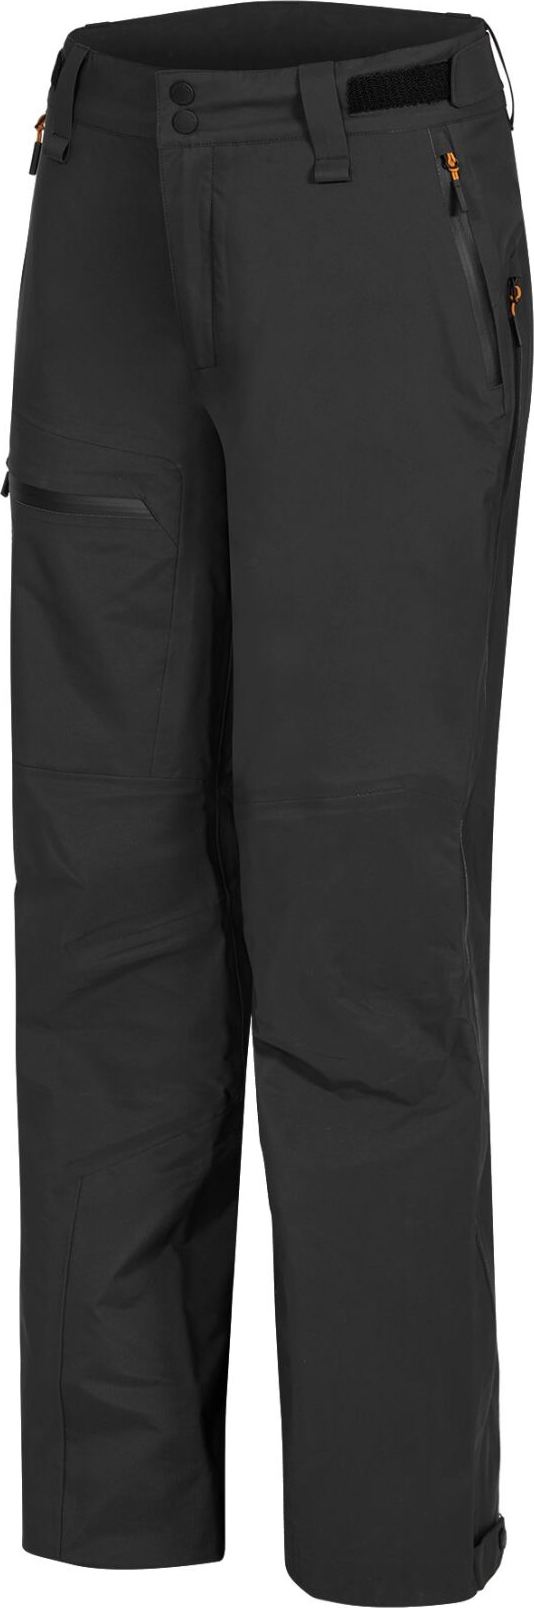 Gridarmor Women’s Storfosna 3-Layer Shell Pants Side Zip Jet Black